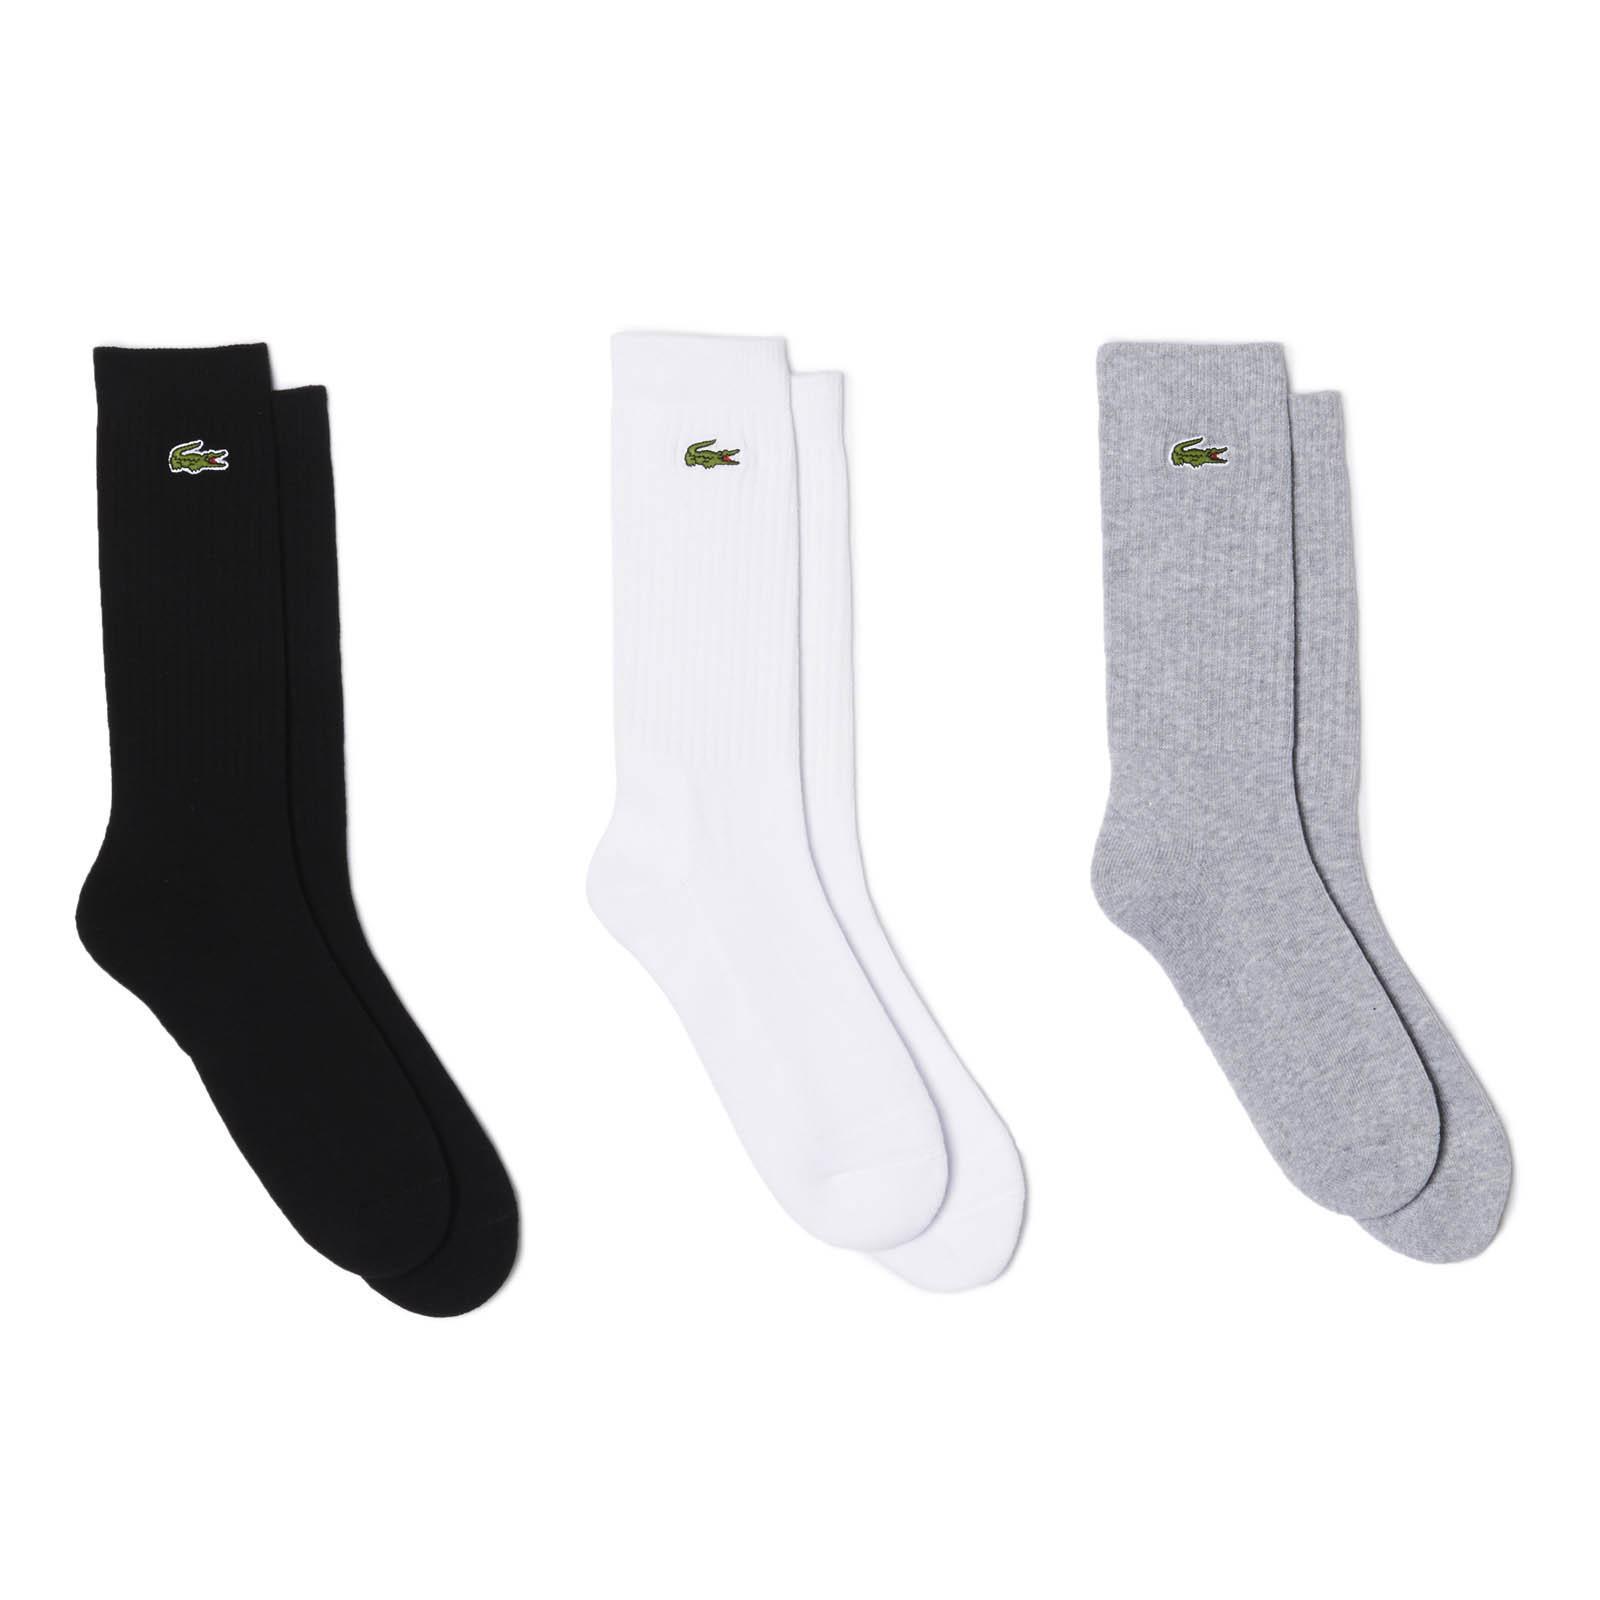 Lacoste Sport Socks (3 Pairs) - White/Black/Grey - Tennisnuts.com